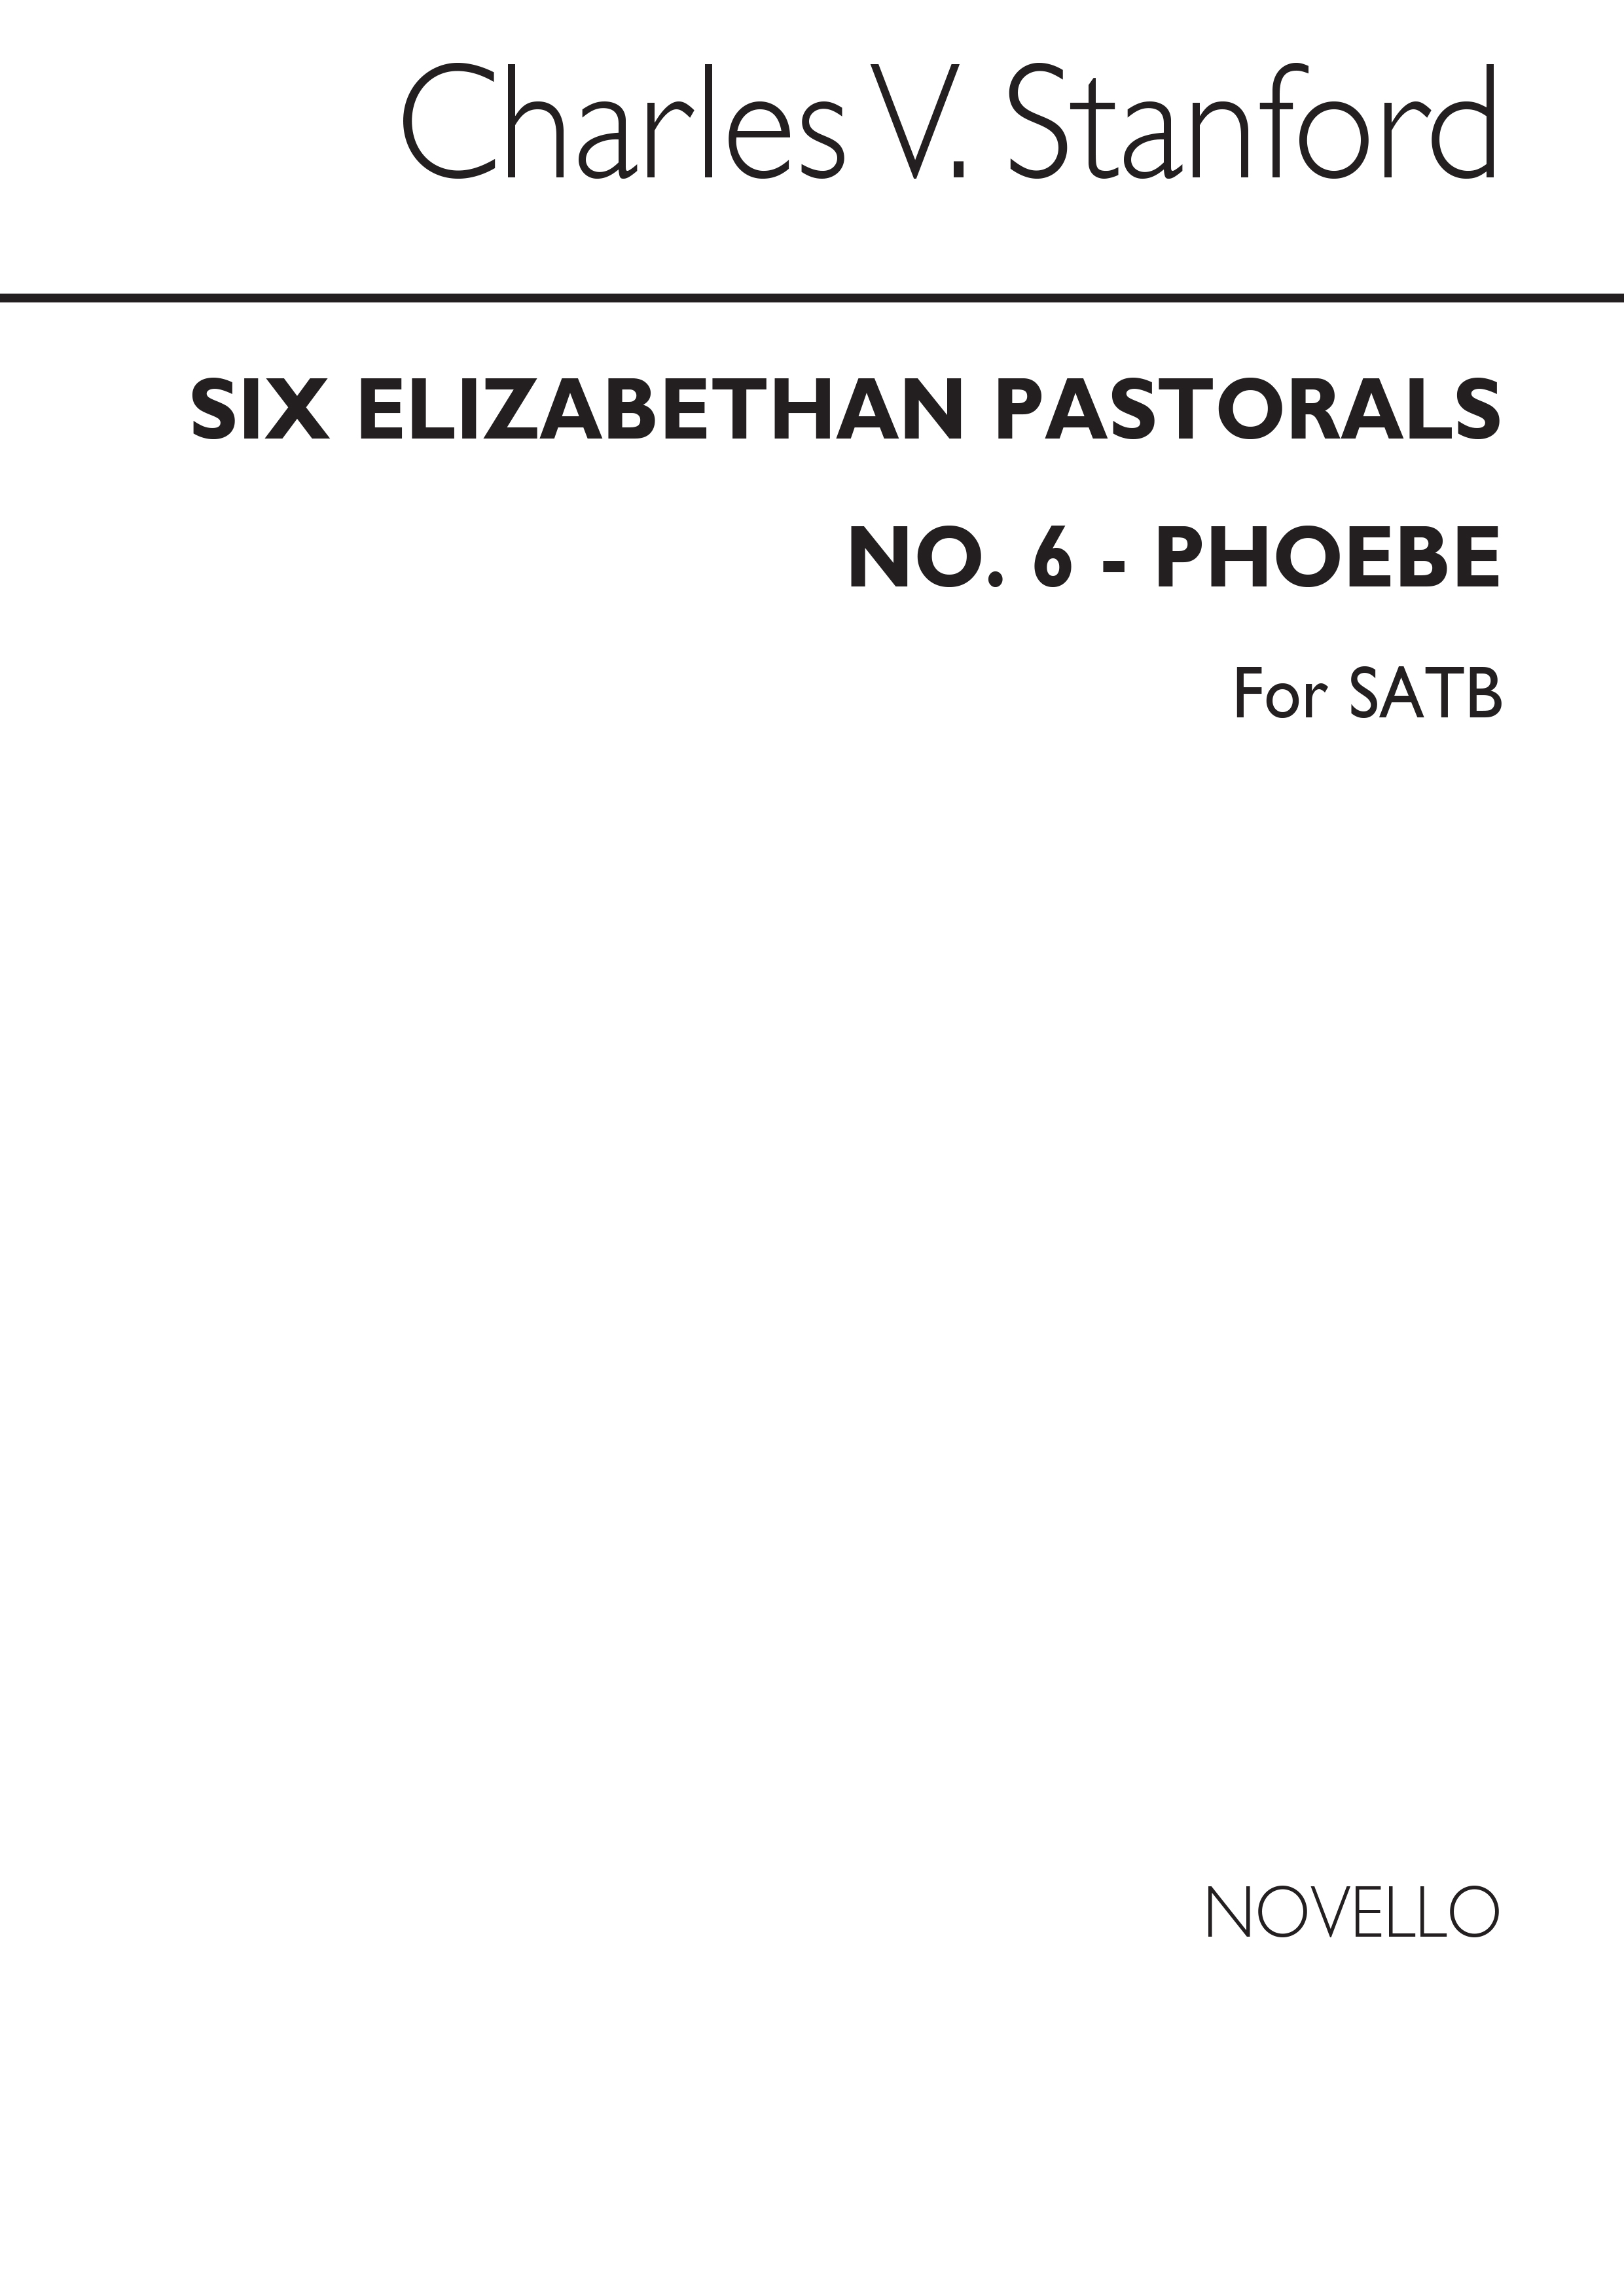 Charles Villiers Stanford: Phoebe No.6 (6 Elizabethan Pastorals Set 1) SATB: